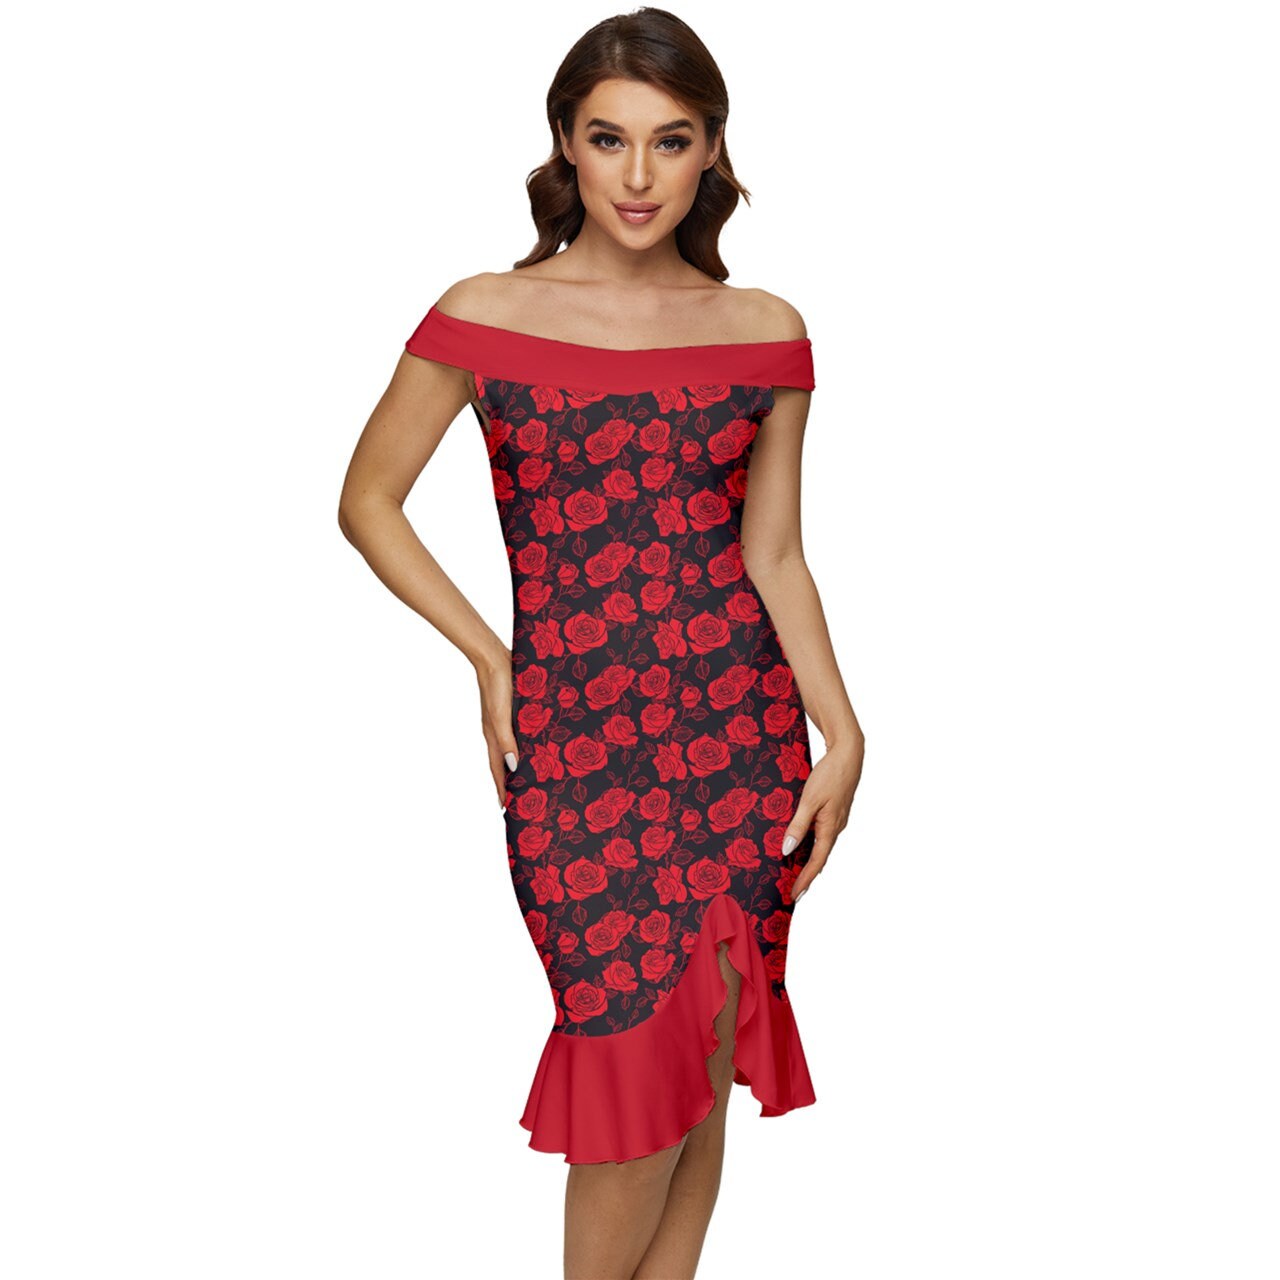 Pin-up-Kleid, rotes Etuikleid, Retro-Kleid im 40er-Jahre-Stil, Damen-Etuikleid, Blumenkleid, Sexy Kleid, schulterfreies Kleid, rotes Rosenkleid